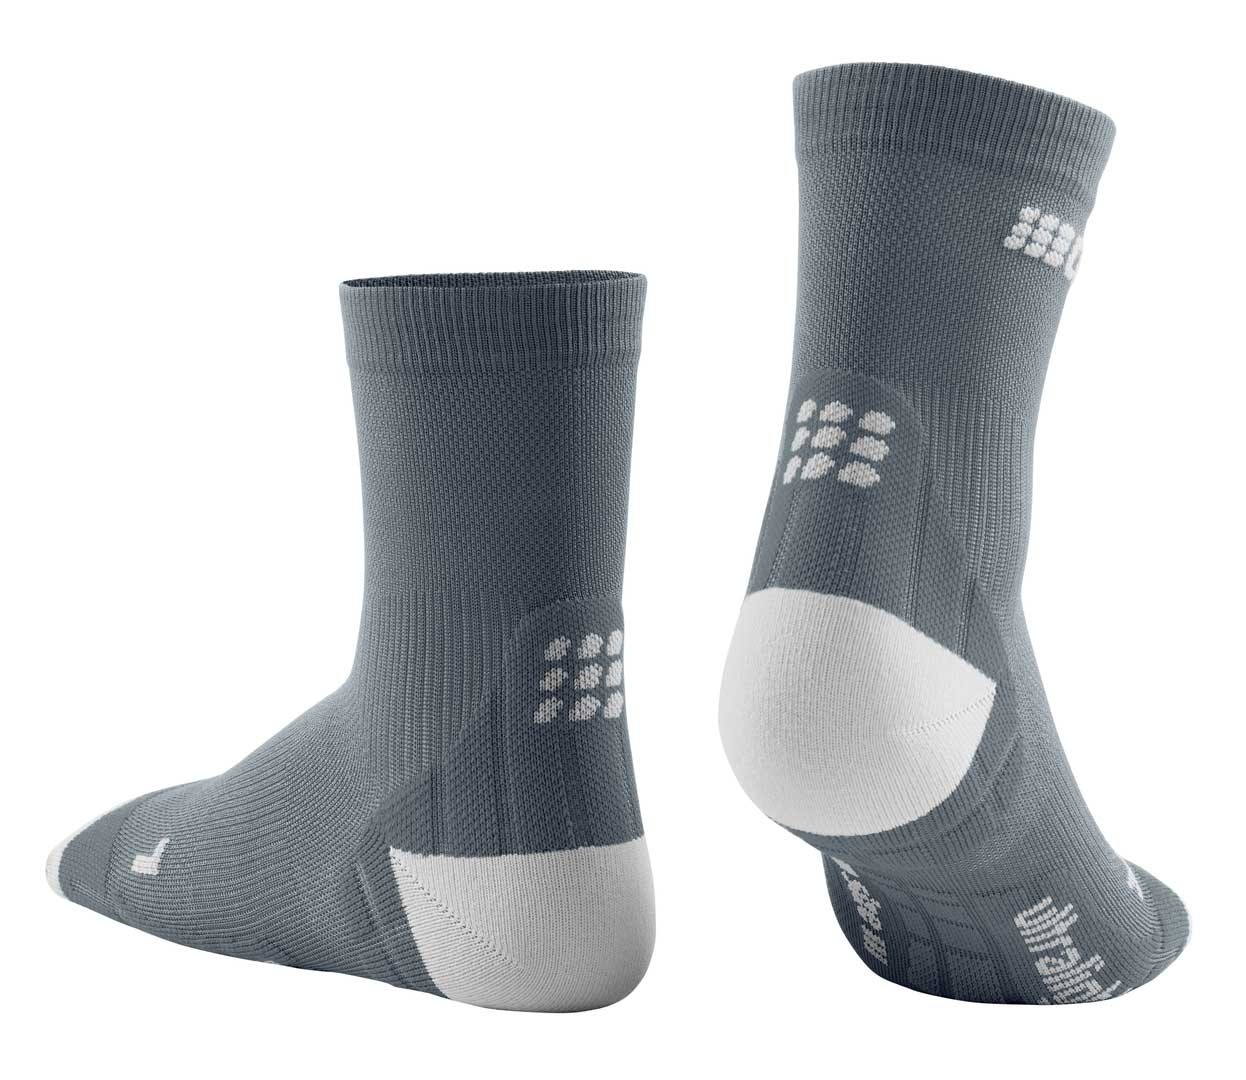 Download CEP Ultralight short socks